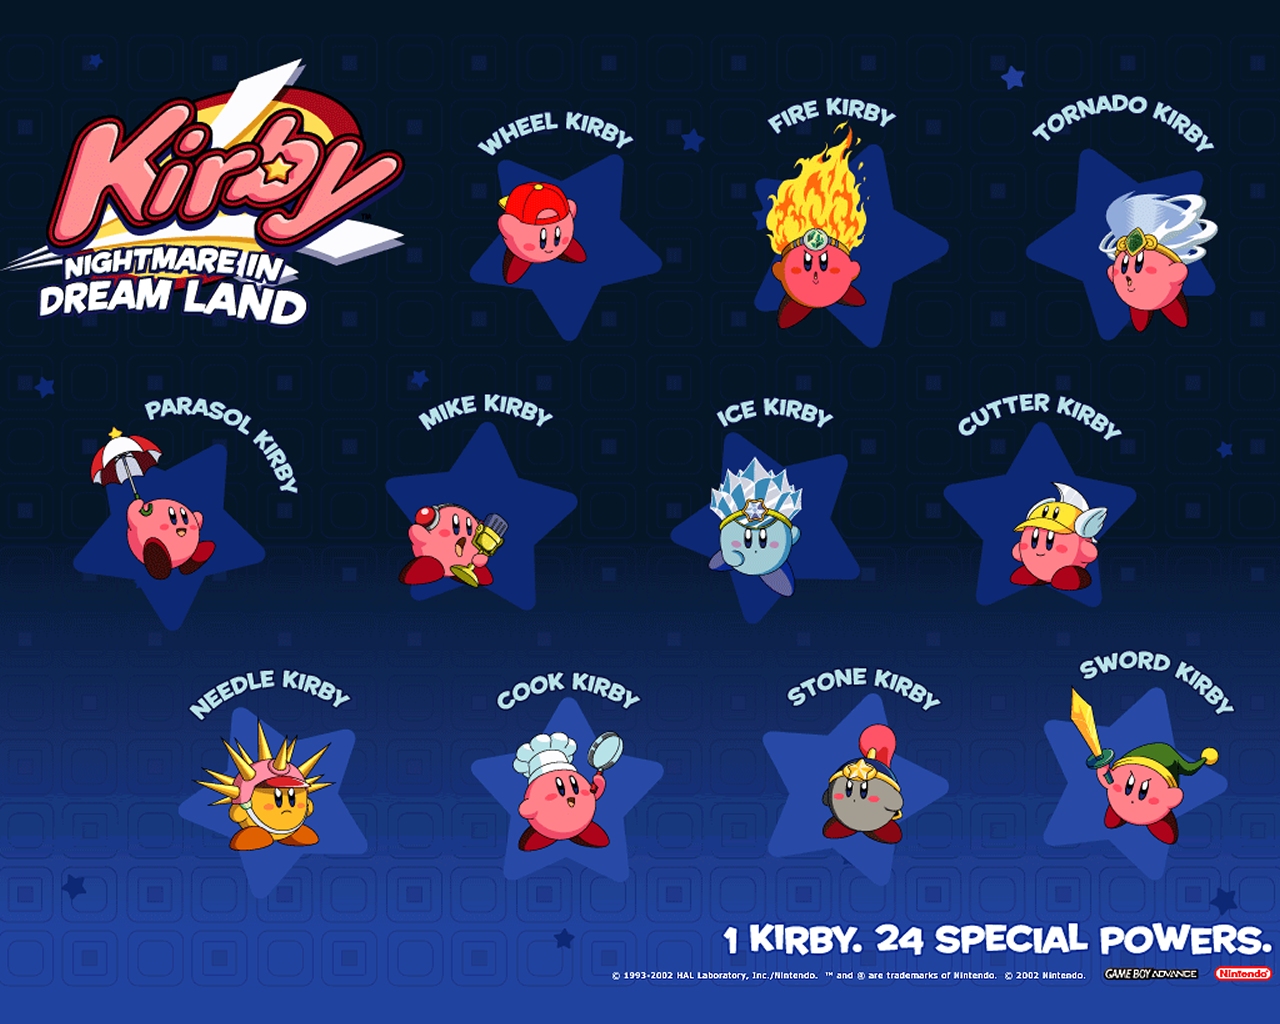 "Kirby: Nightmare in Dreamland" desktop wallpaper (1280 x 1024 pixels)